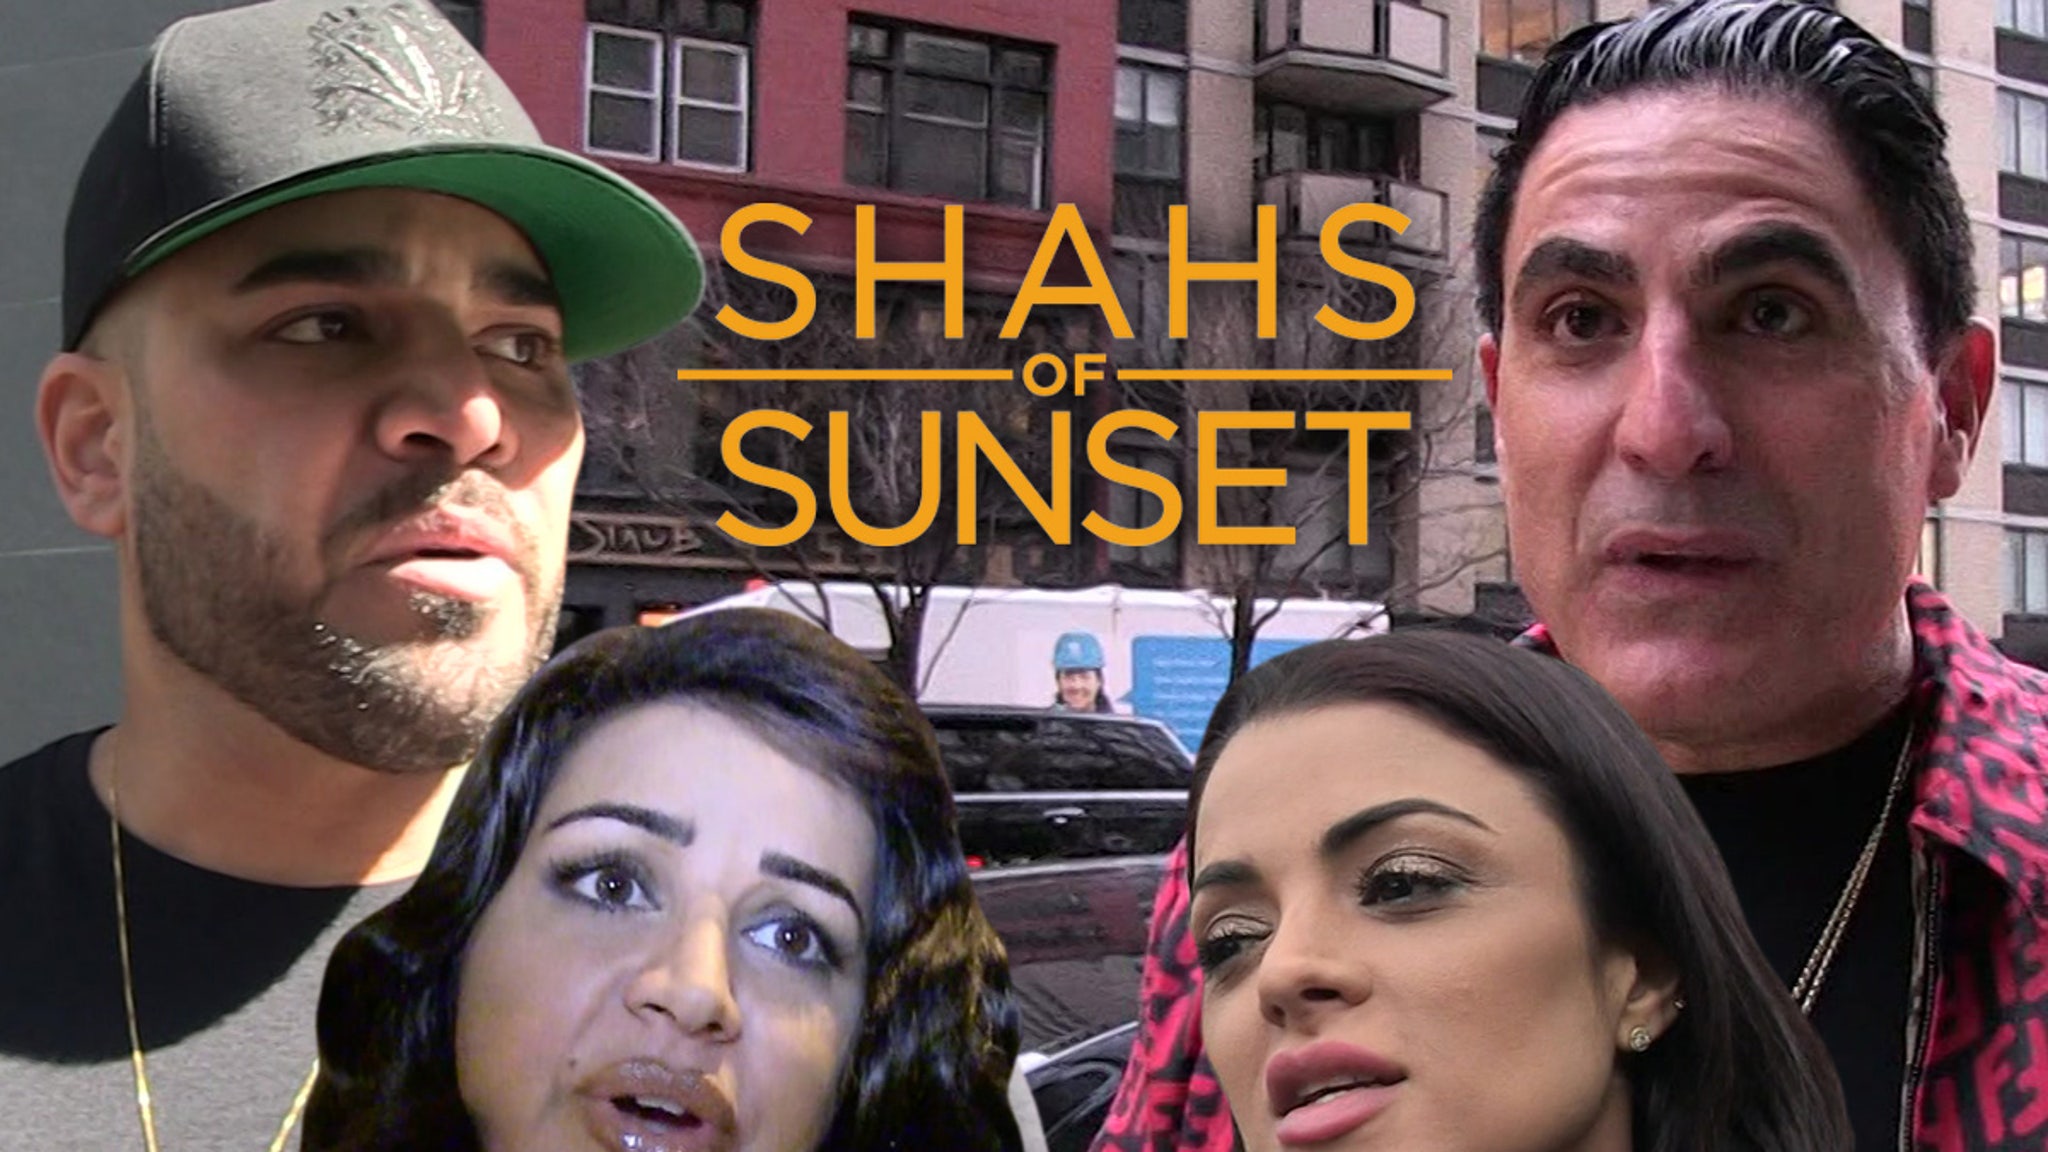 'Shahs of Sunset' Canceled on Bravo After 9 Seasons